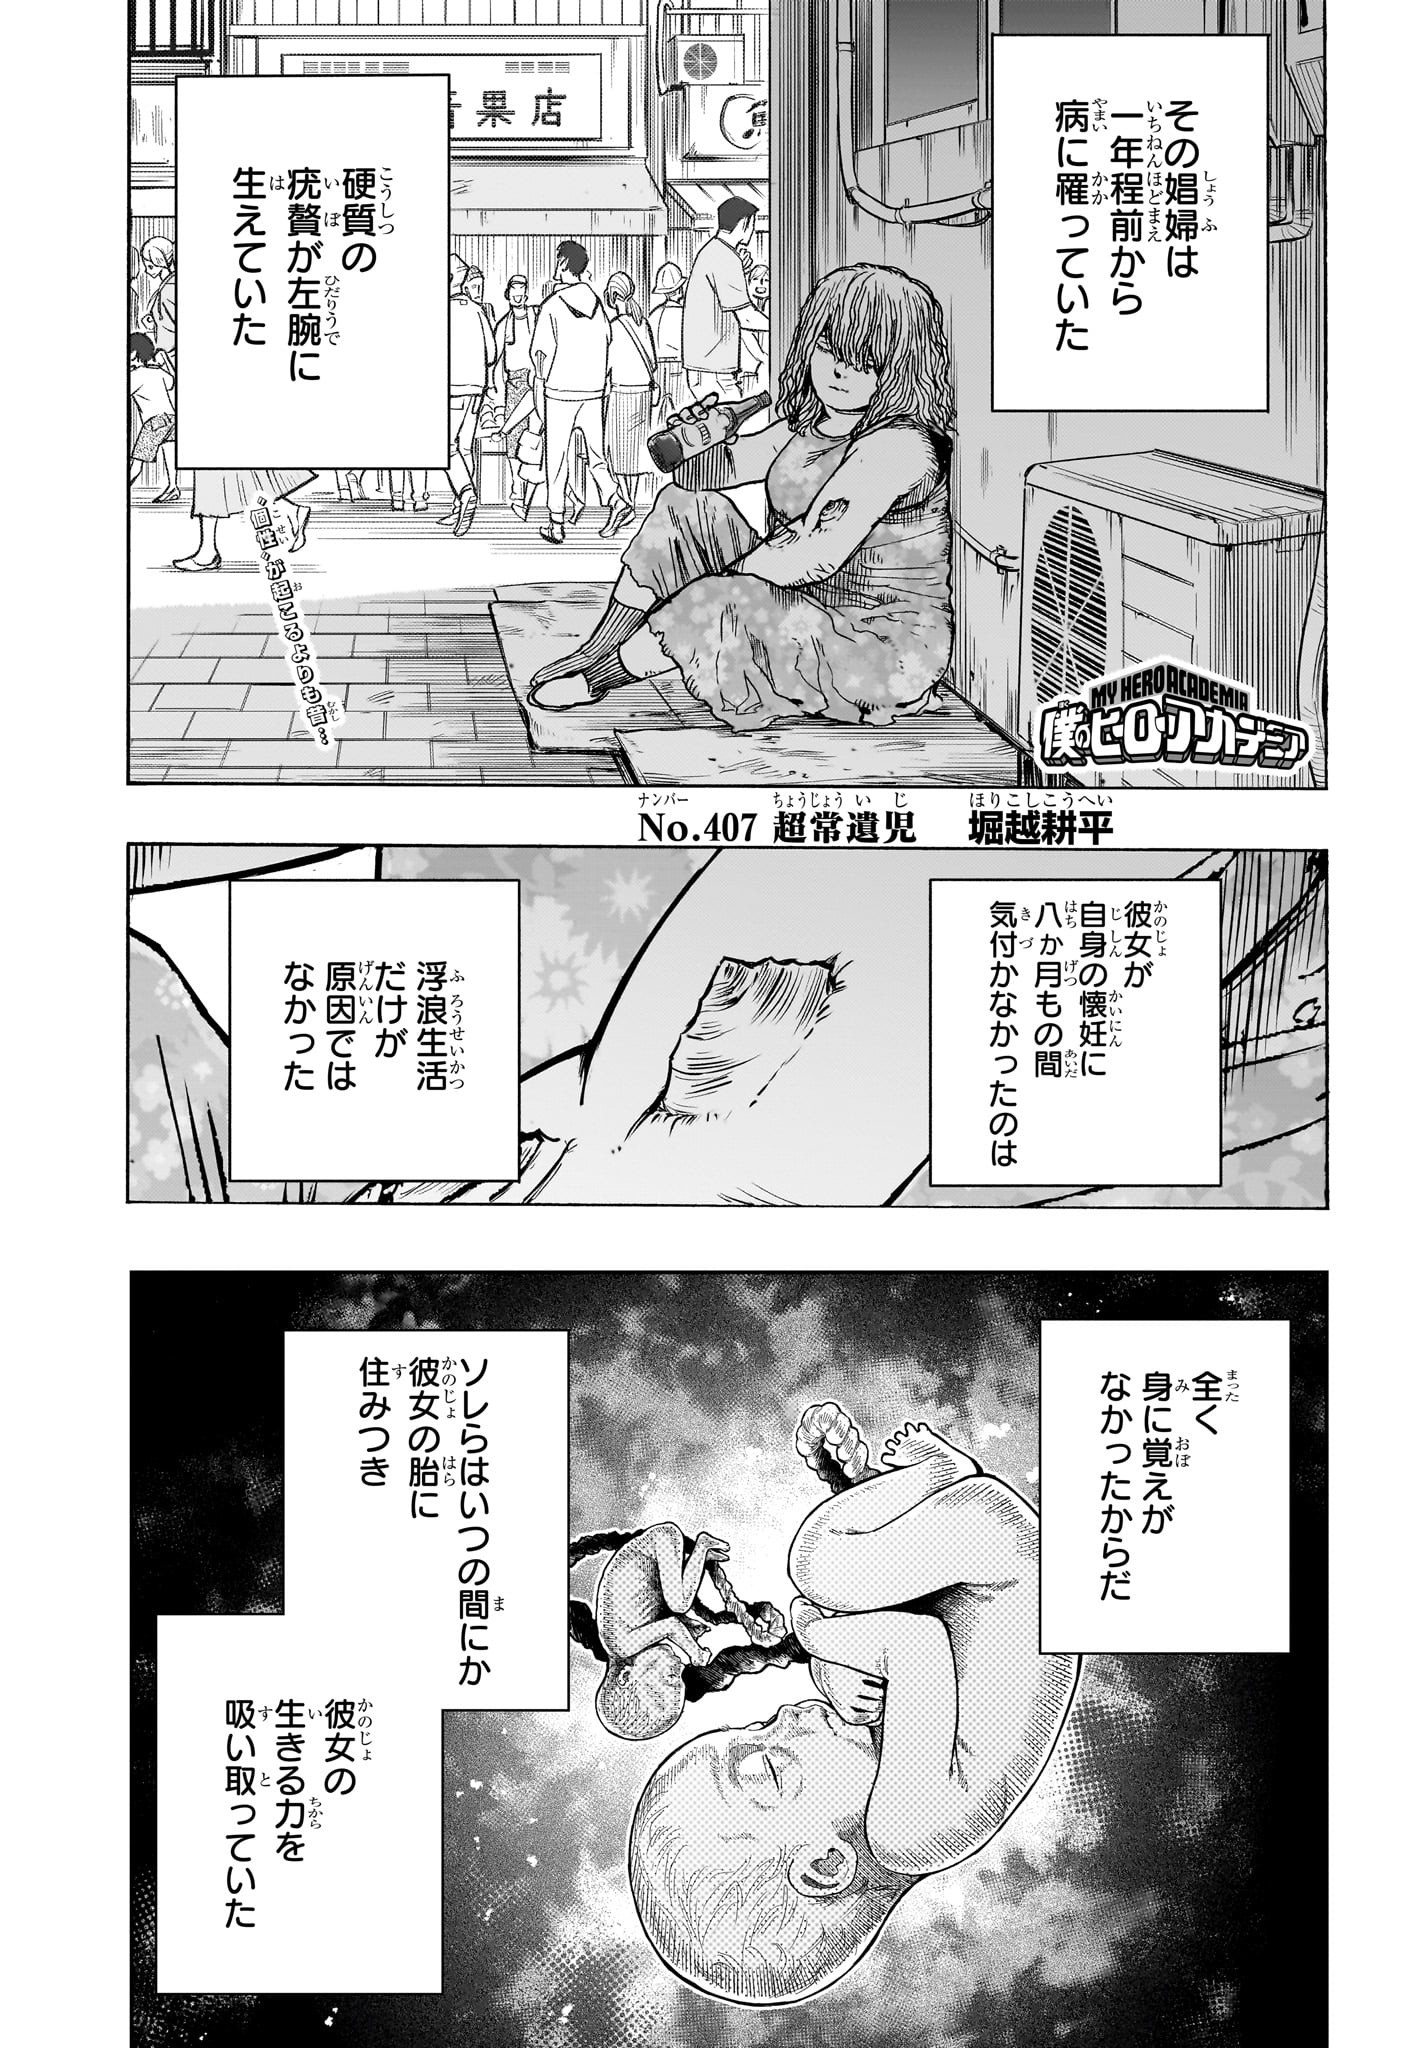 Boku no Hero Academia - Chapter 407 - Page 1